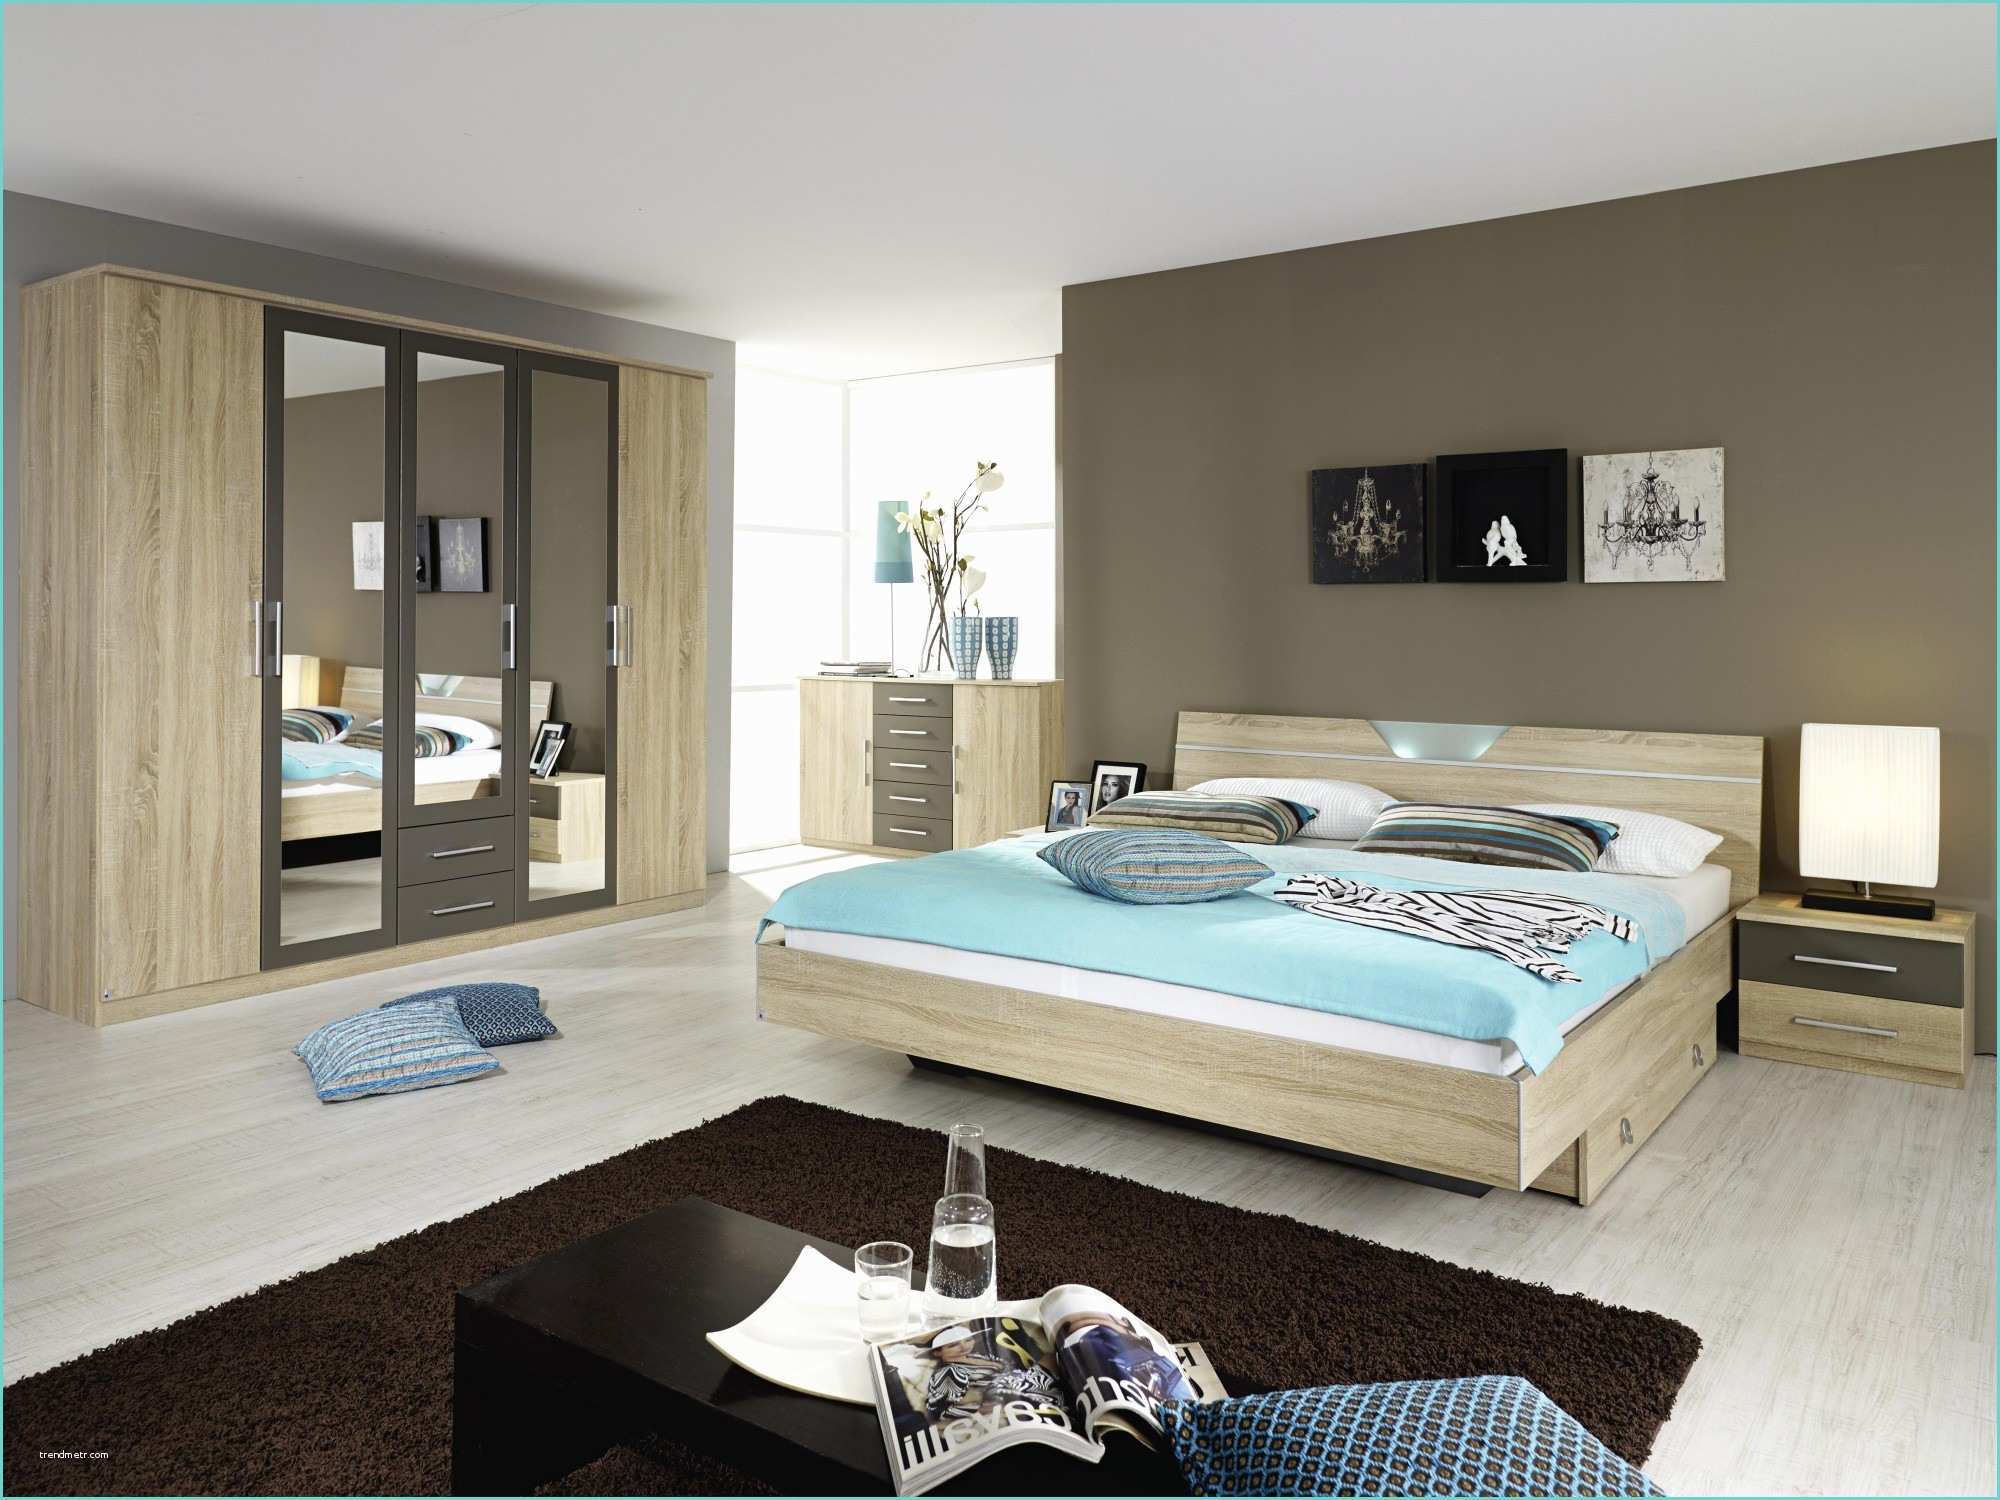 Chambre A Coucher Complete Chambre Adulte Plete Ikea Idees D Chambre Chambre A